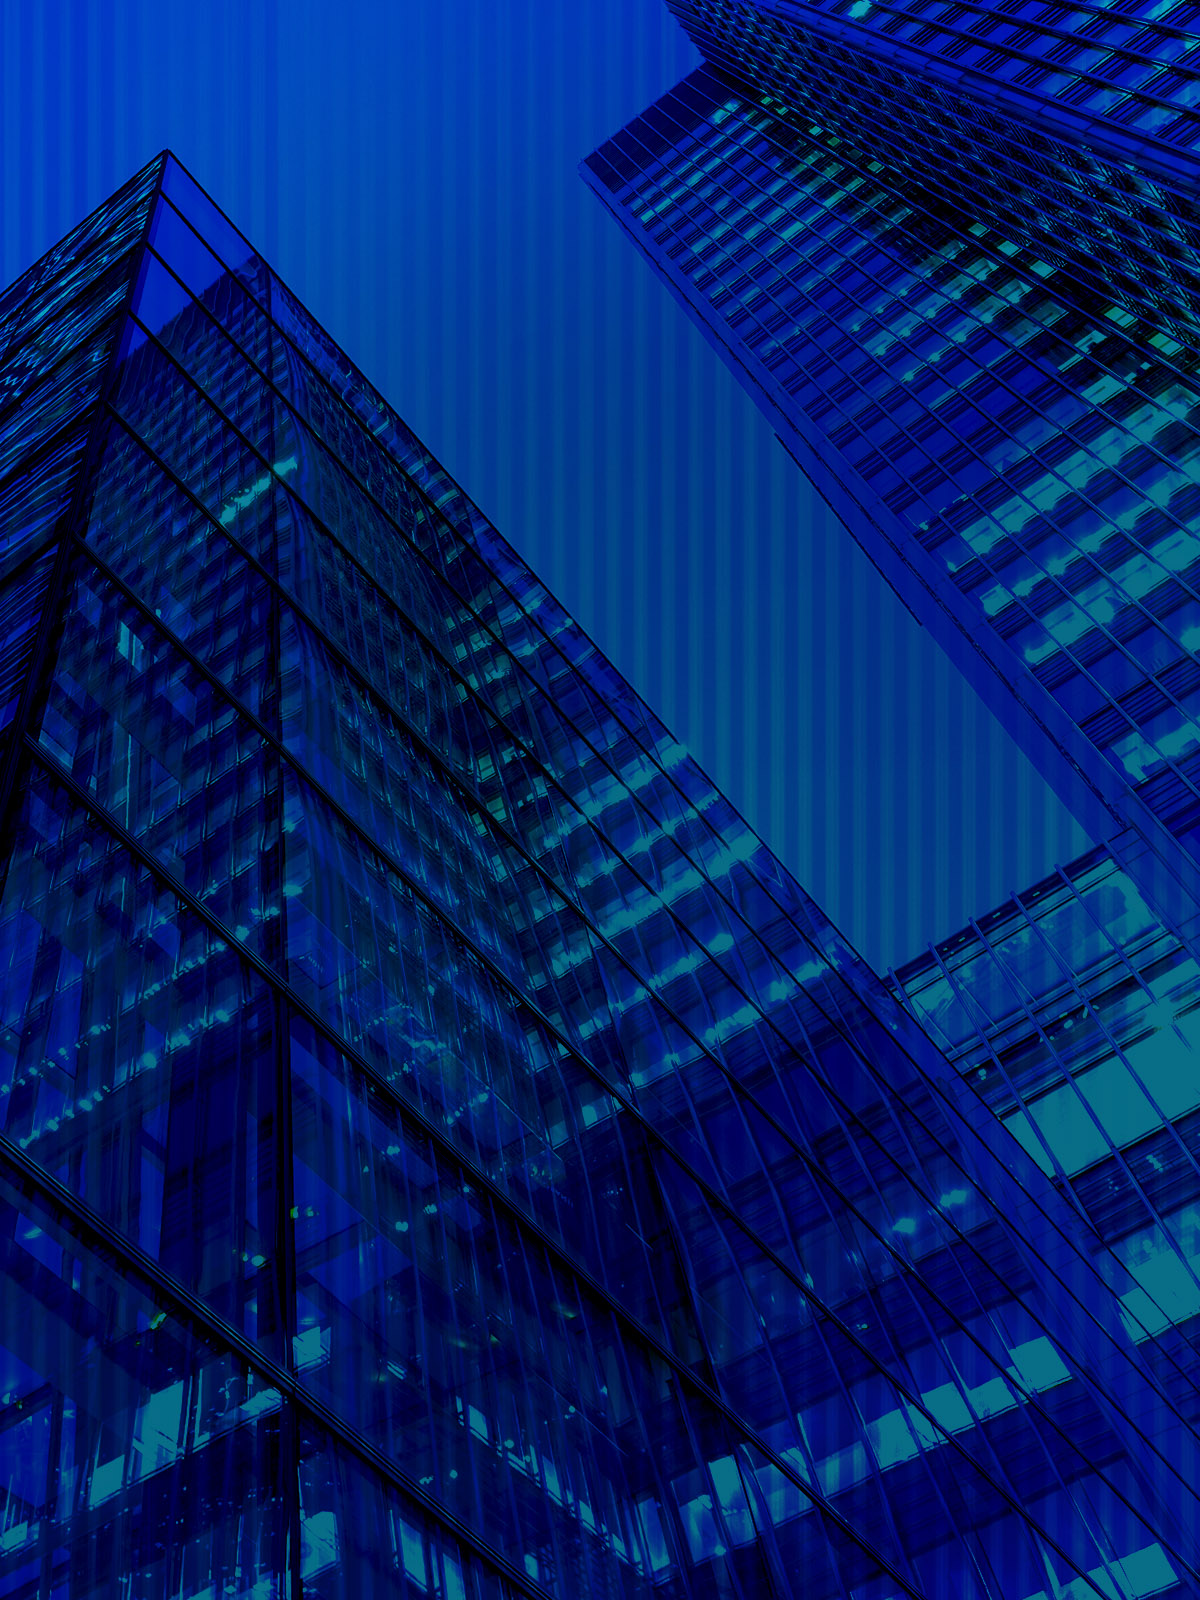 Dark blue image of skyscrapers